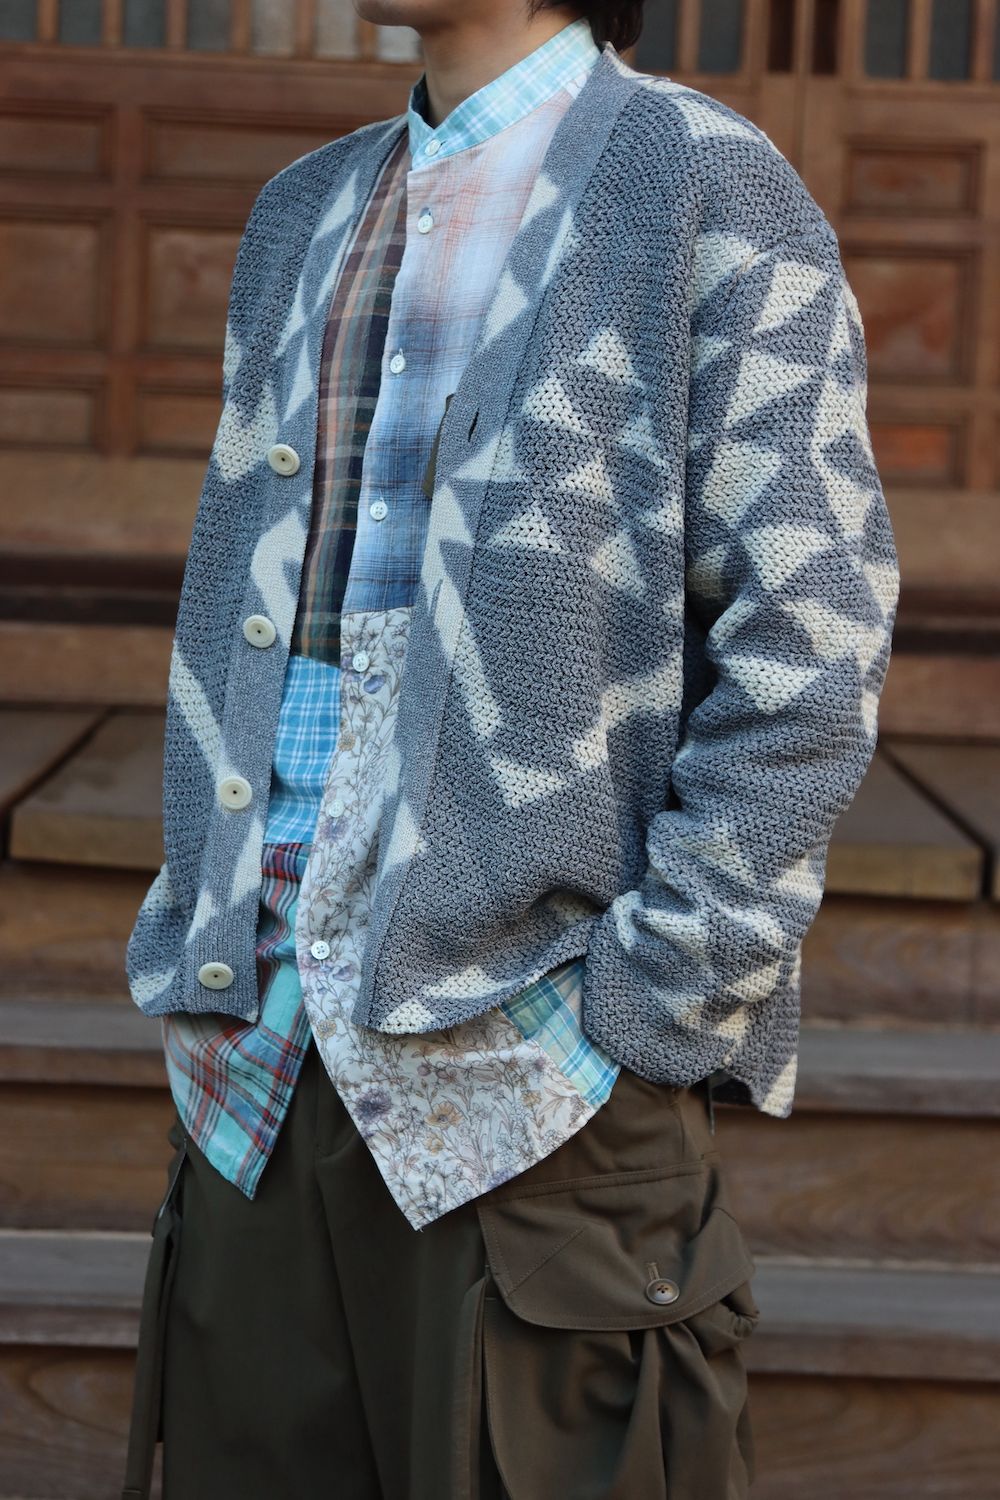 KHOKI Washi knit cardigan(22SS-K-03),Madras check shirt(22SS-B-03 ...